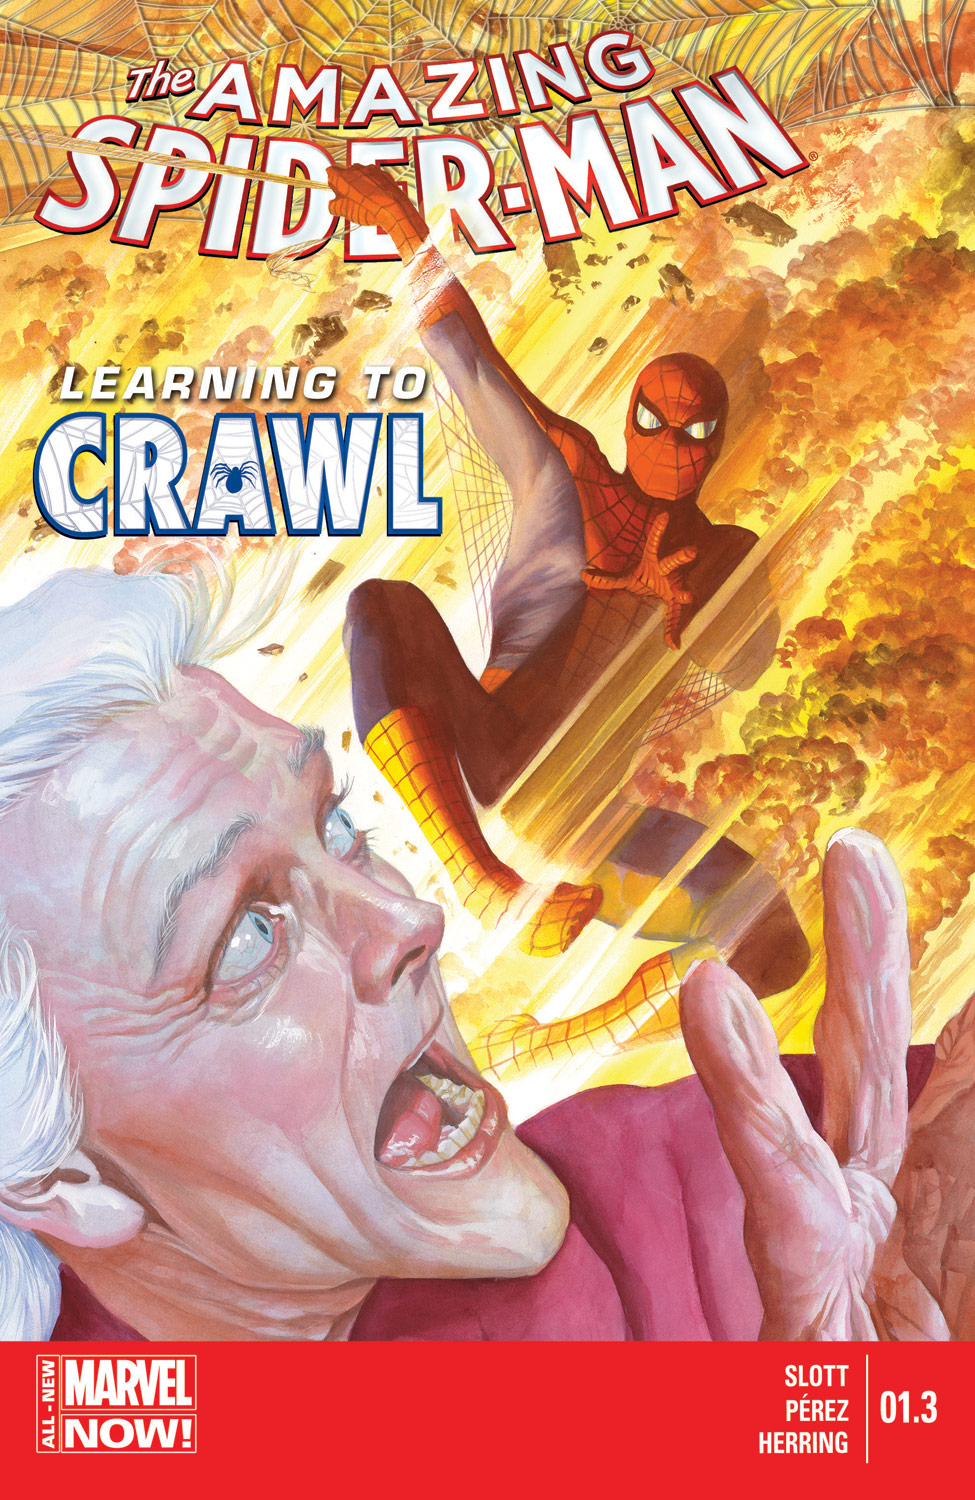 The Amazing Spider-Man (2014) #1.3